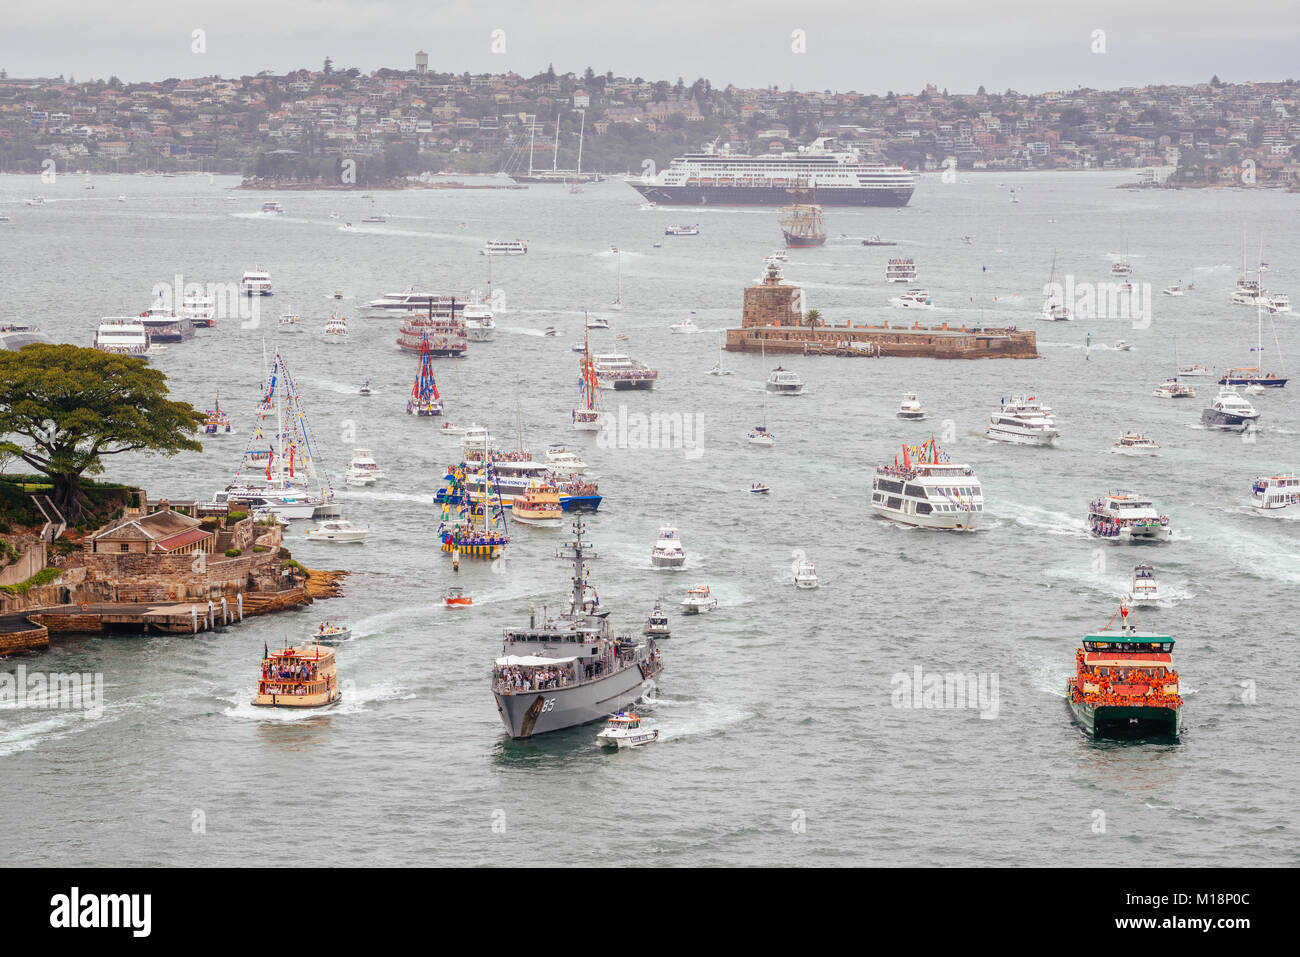 Annual Australia Day Ferry Boat Race - Ferrython, Sydney Harbour, Sydney, New South Wales (NSW), Australia 2018 Stock Photo